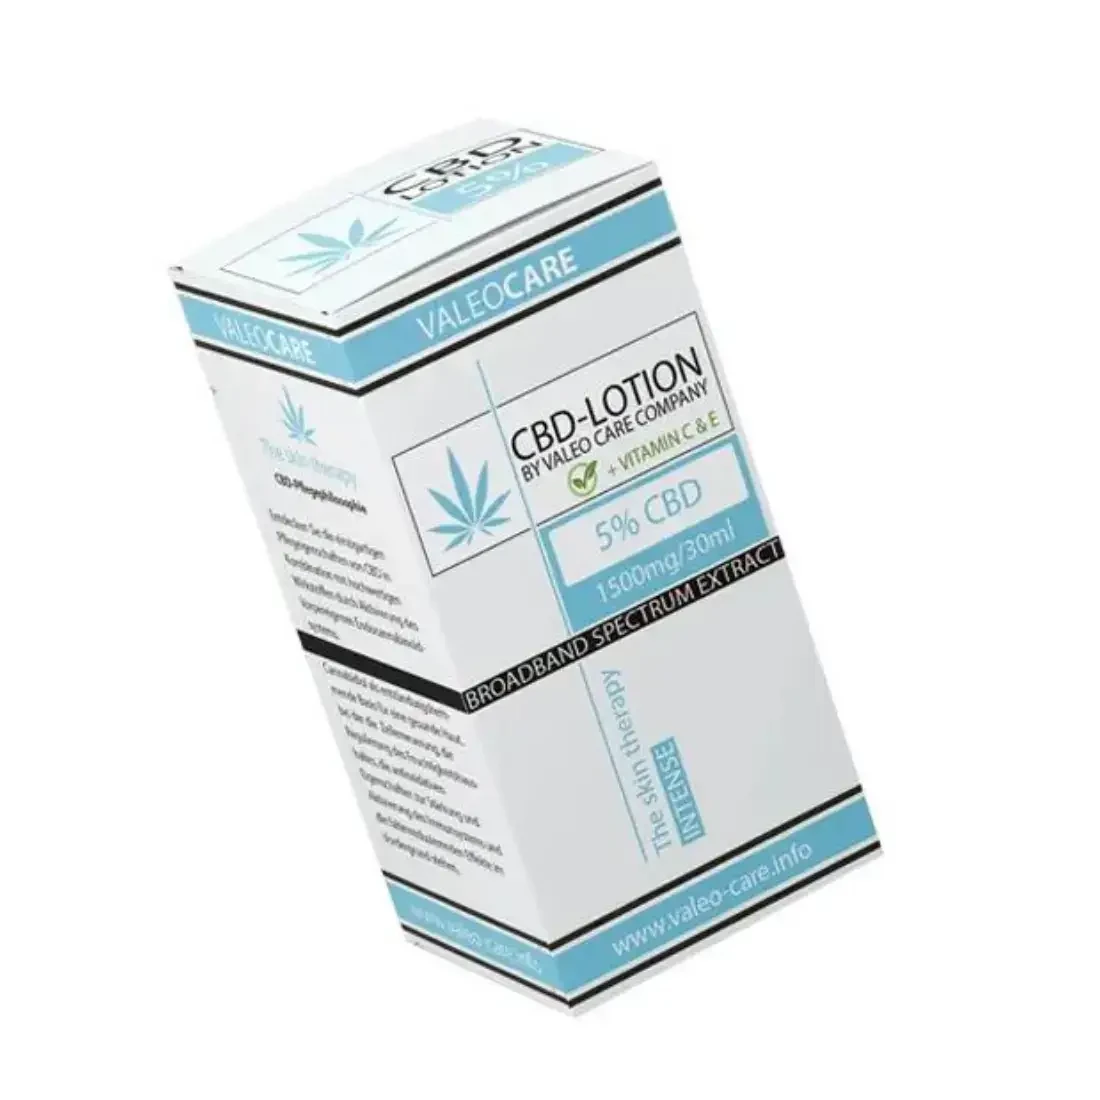 custom-design-cbd-lotion-boxes